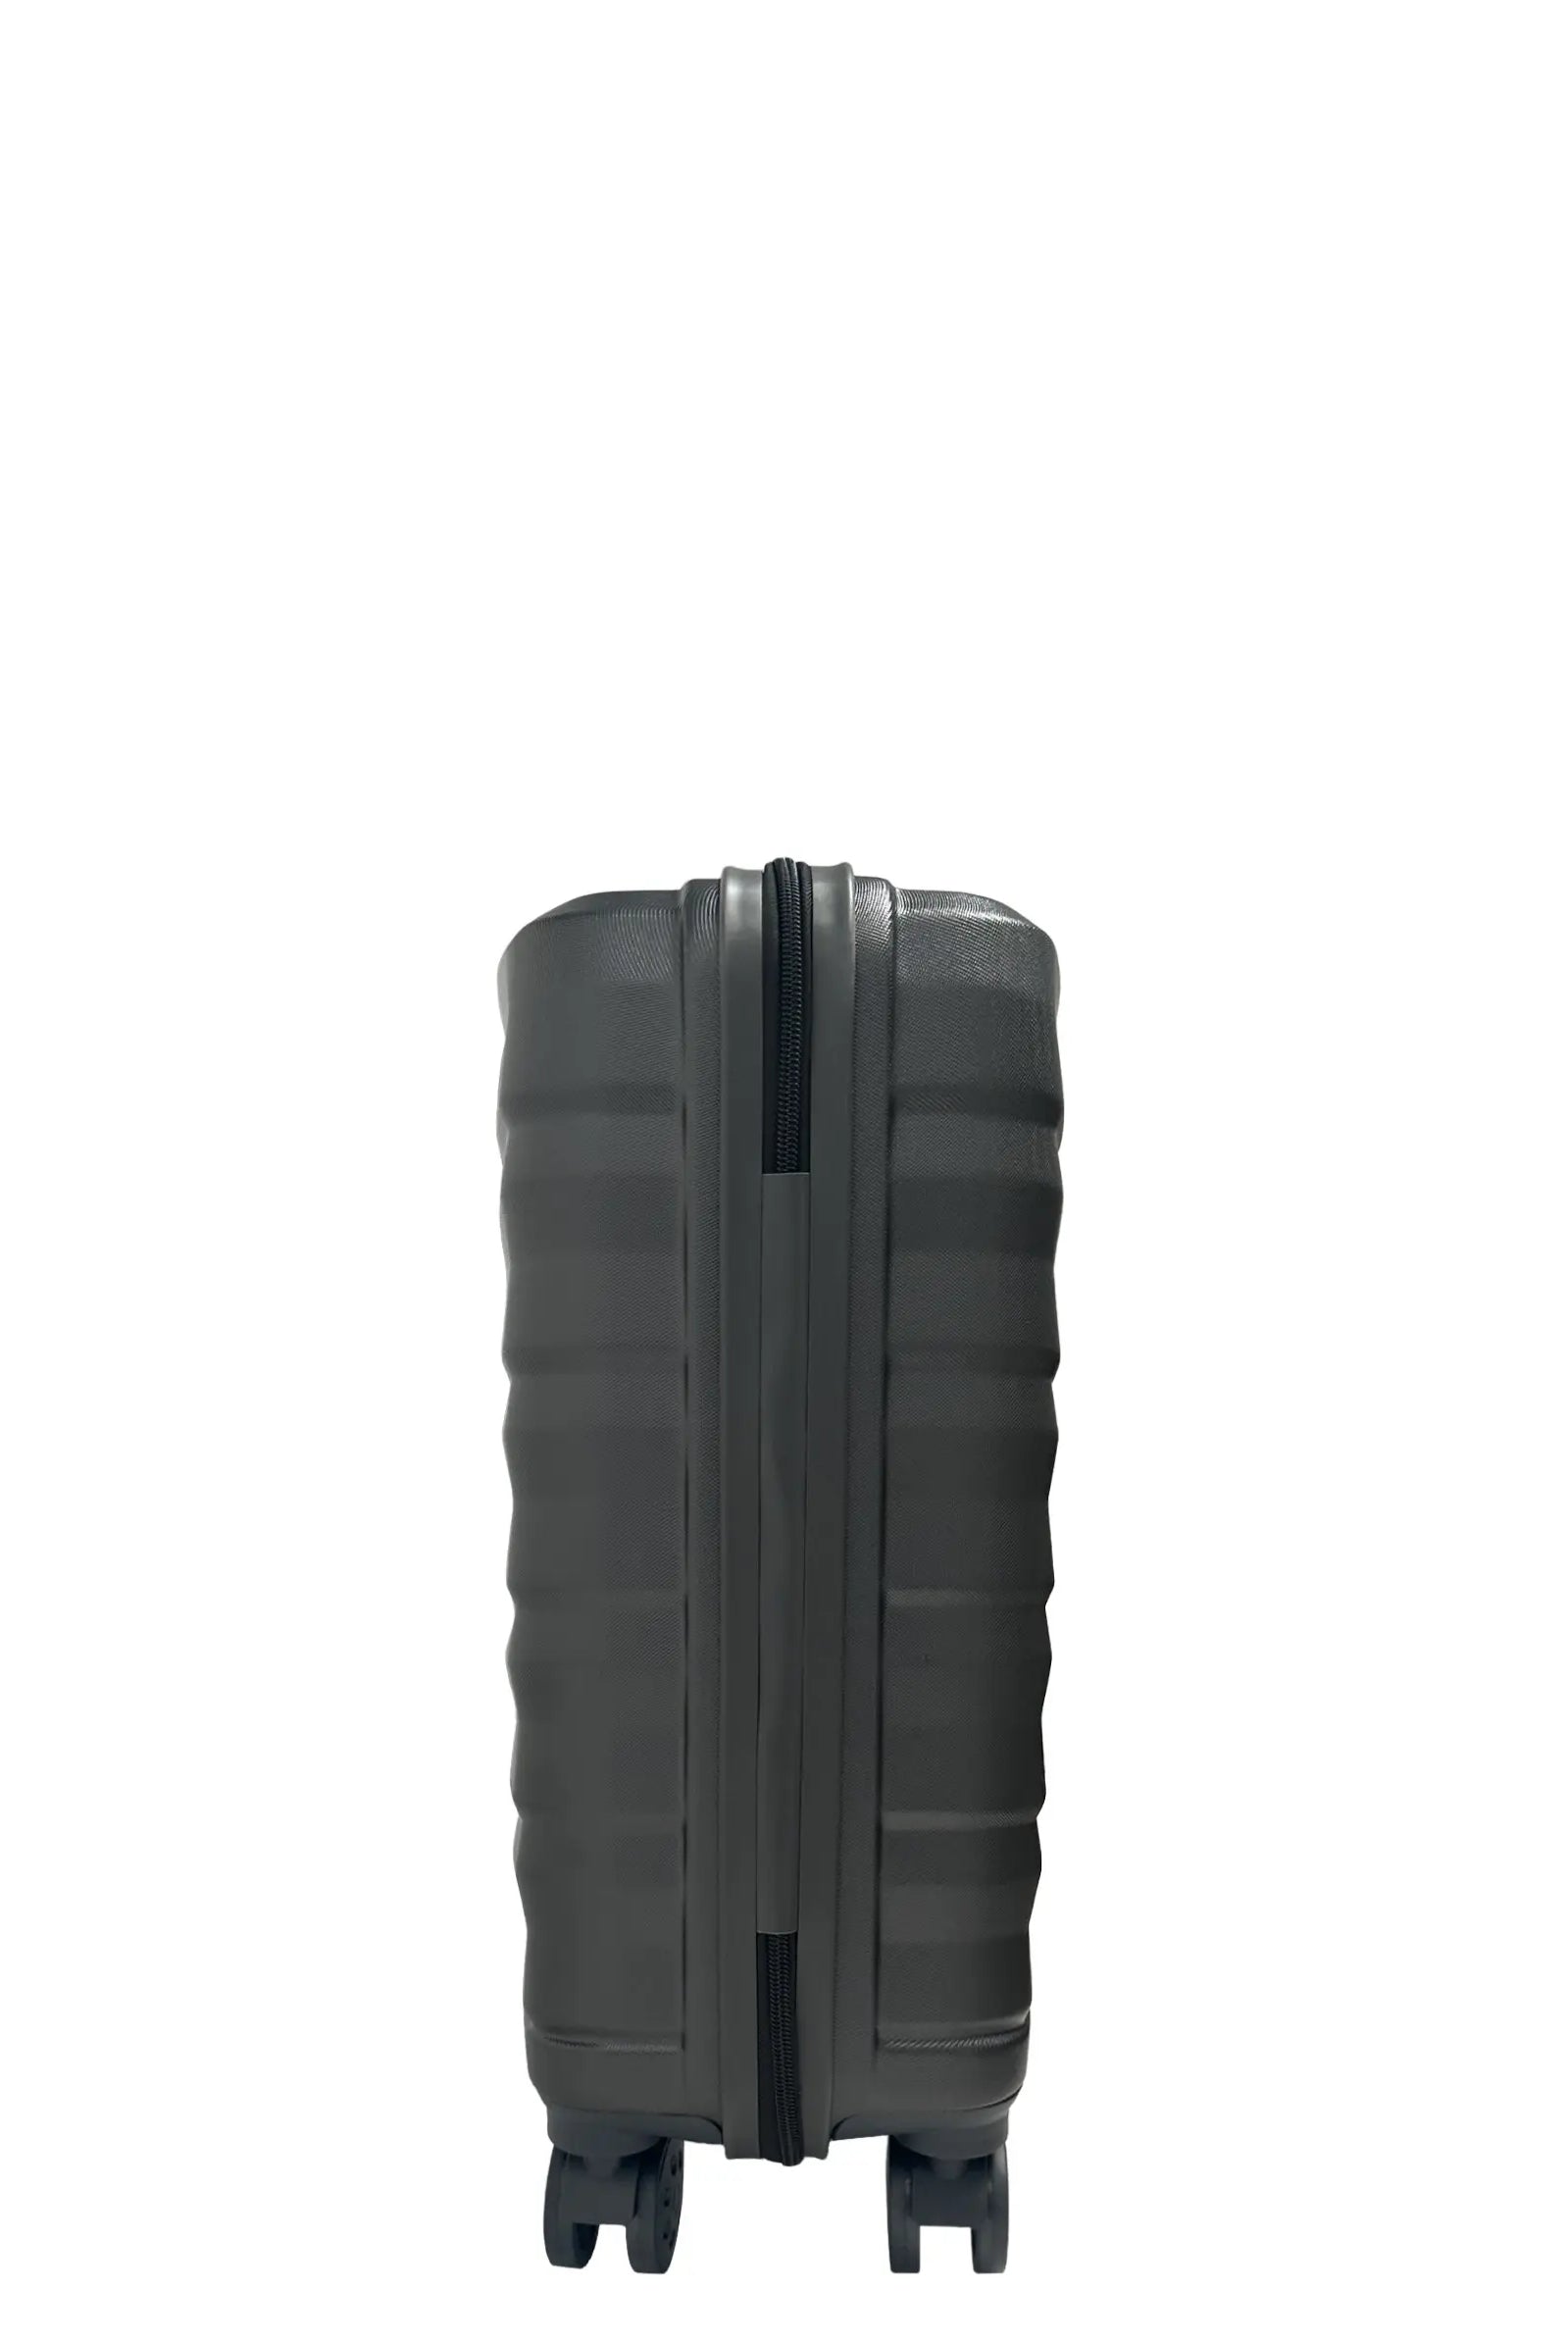 Dark grey suitcases